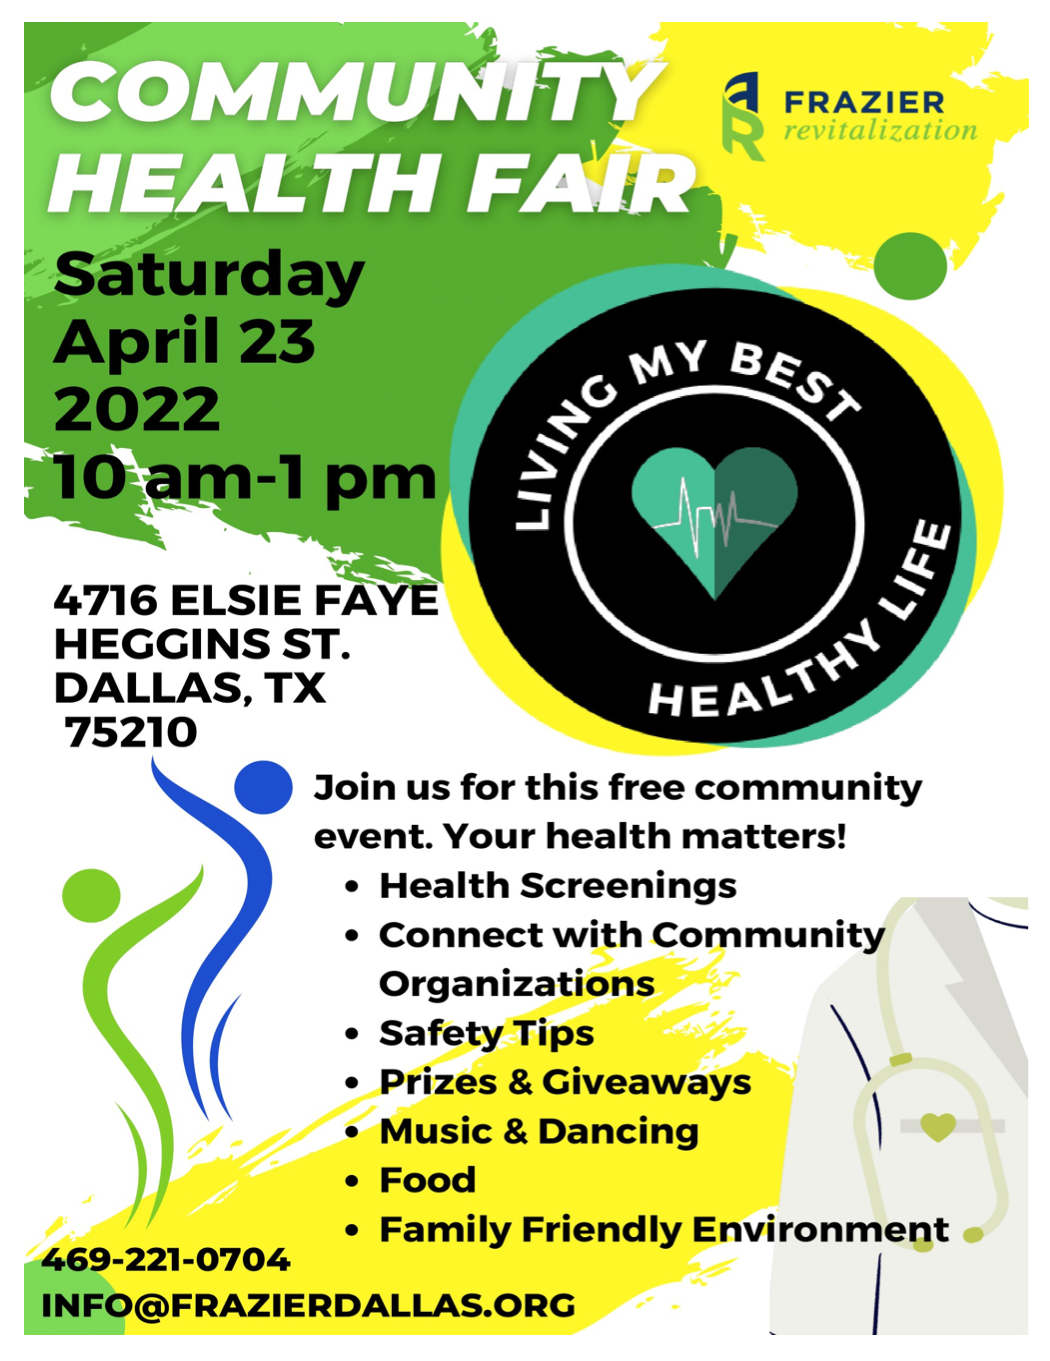 Frazier Community Health Fair